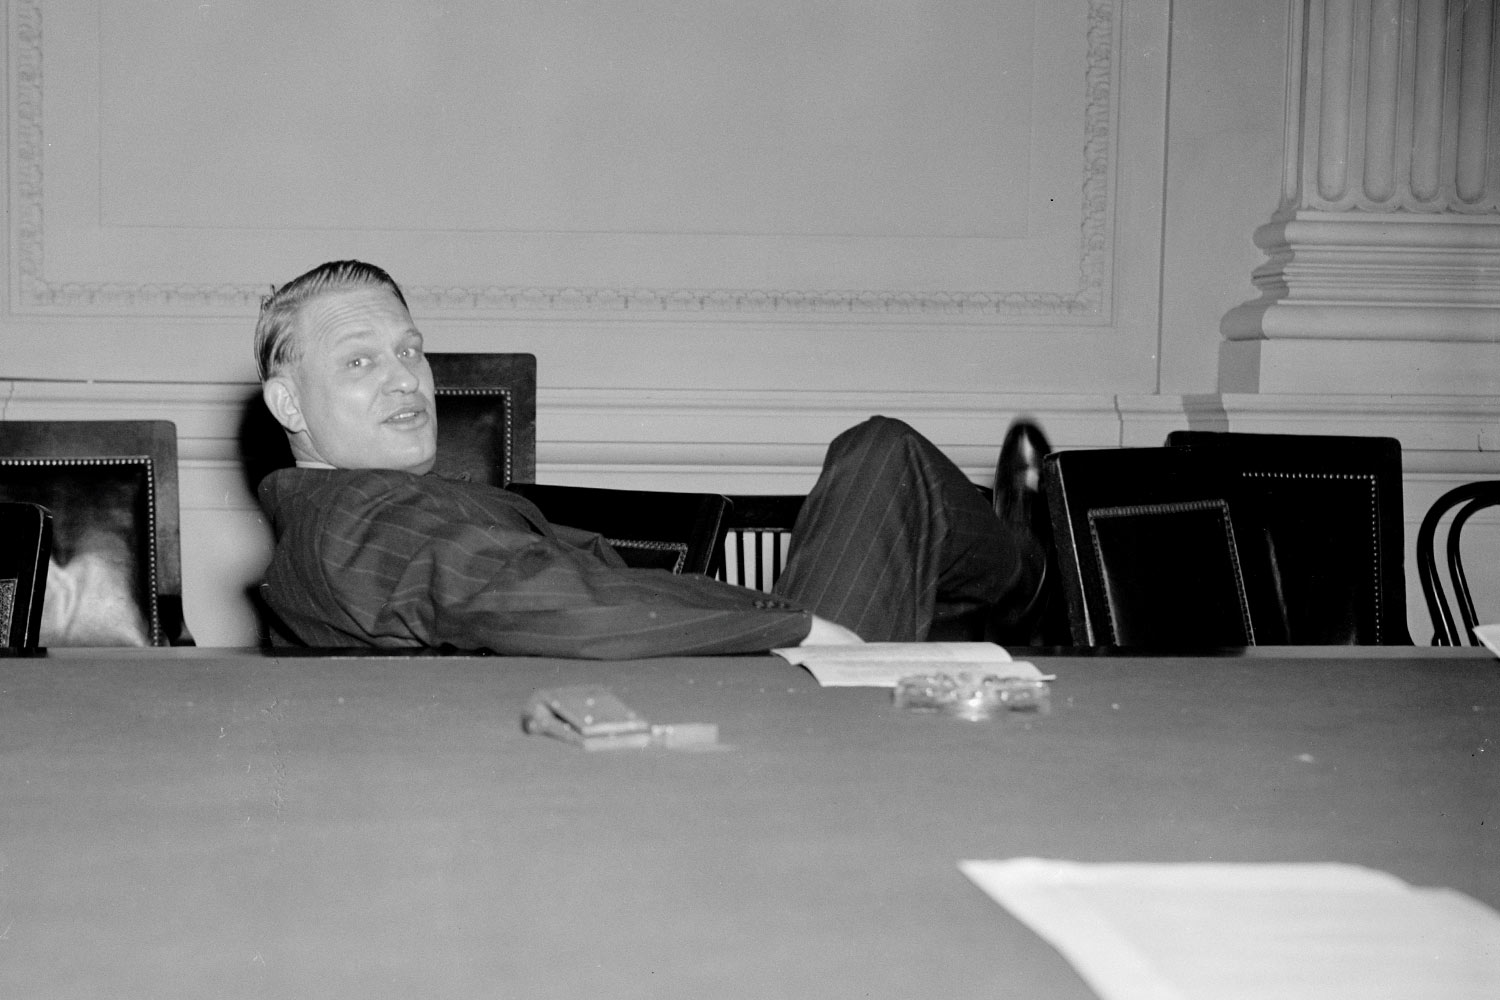 Historic image of New Deal-era writer behind desk